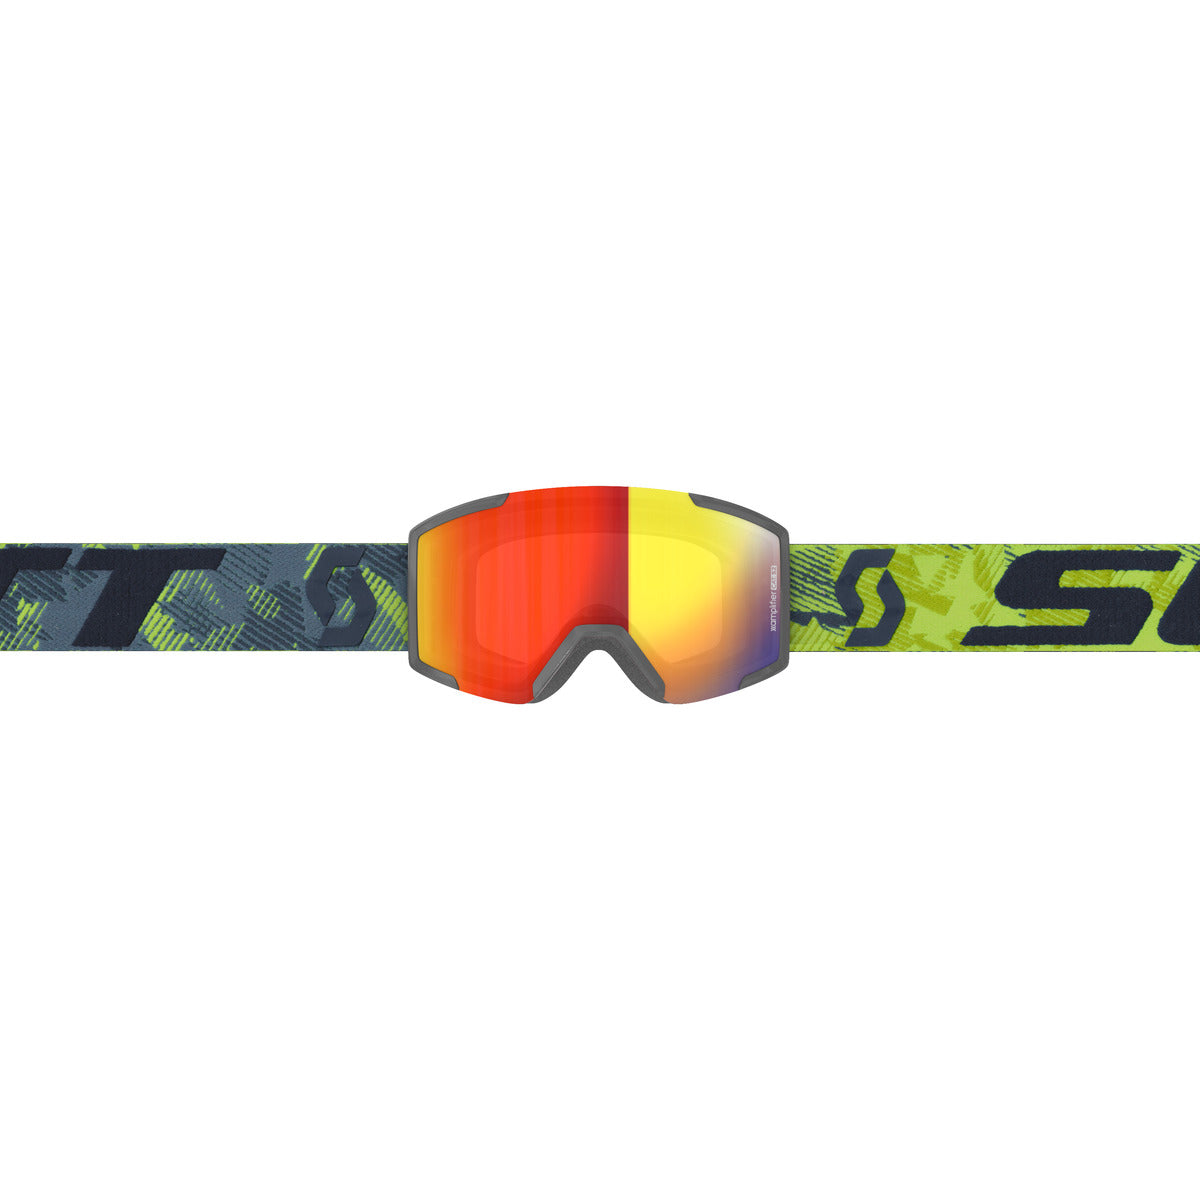 Scott Shield skibril - Lenscategorie S2 - grijs/groen